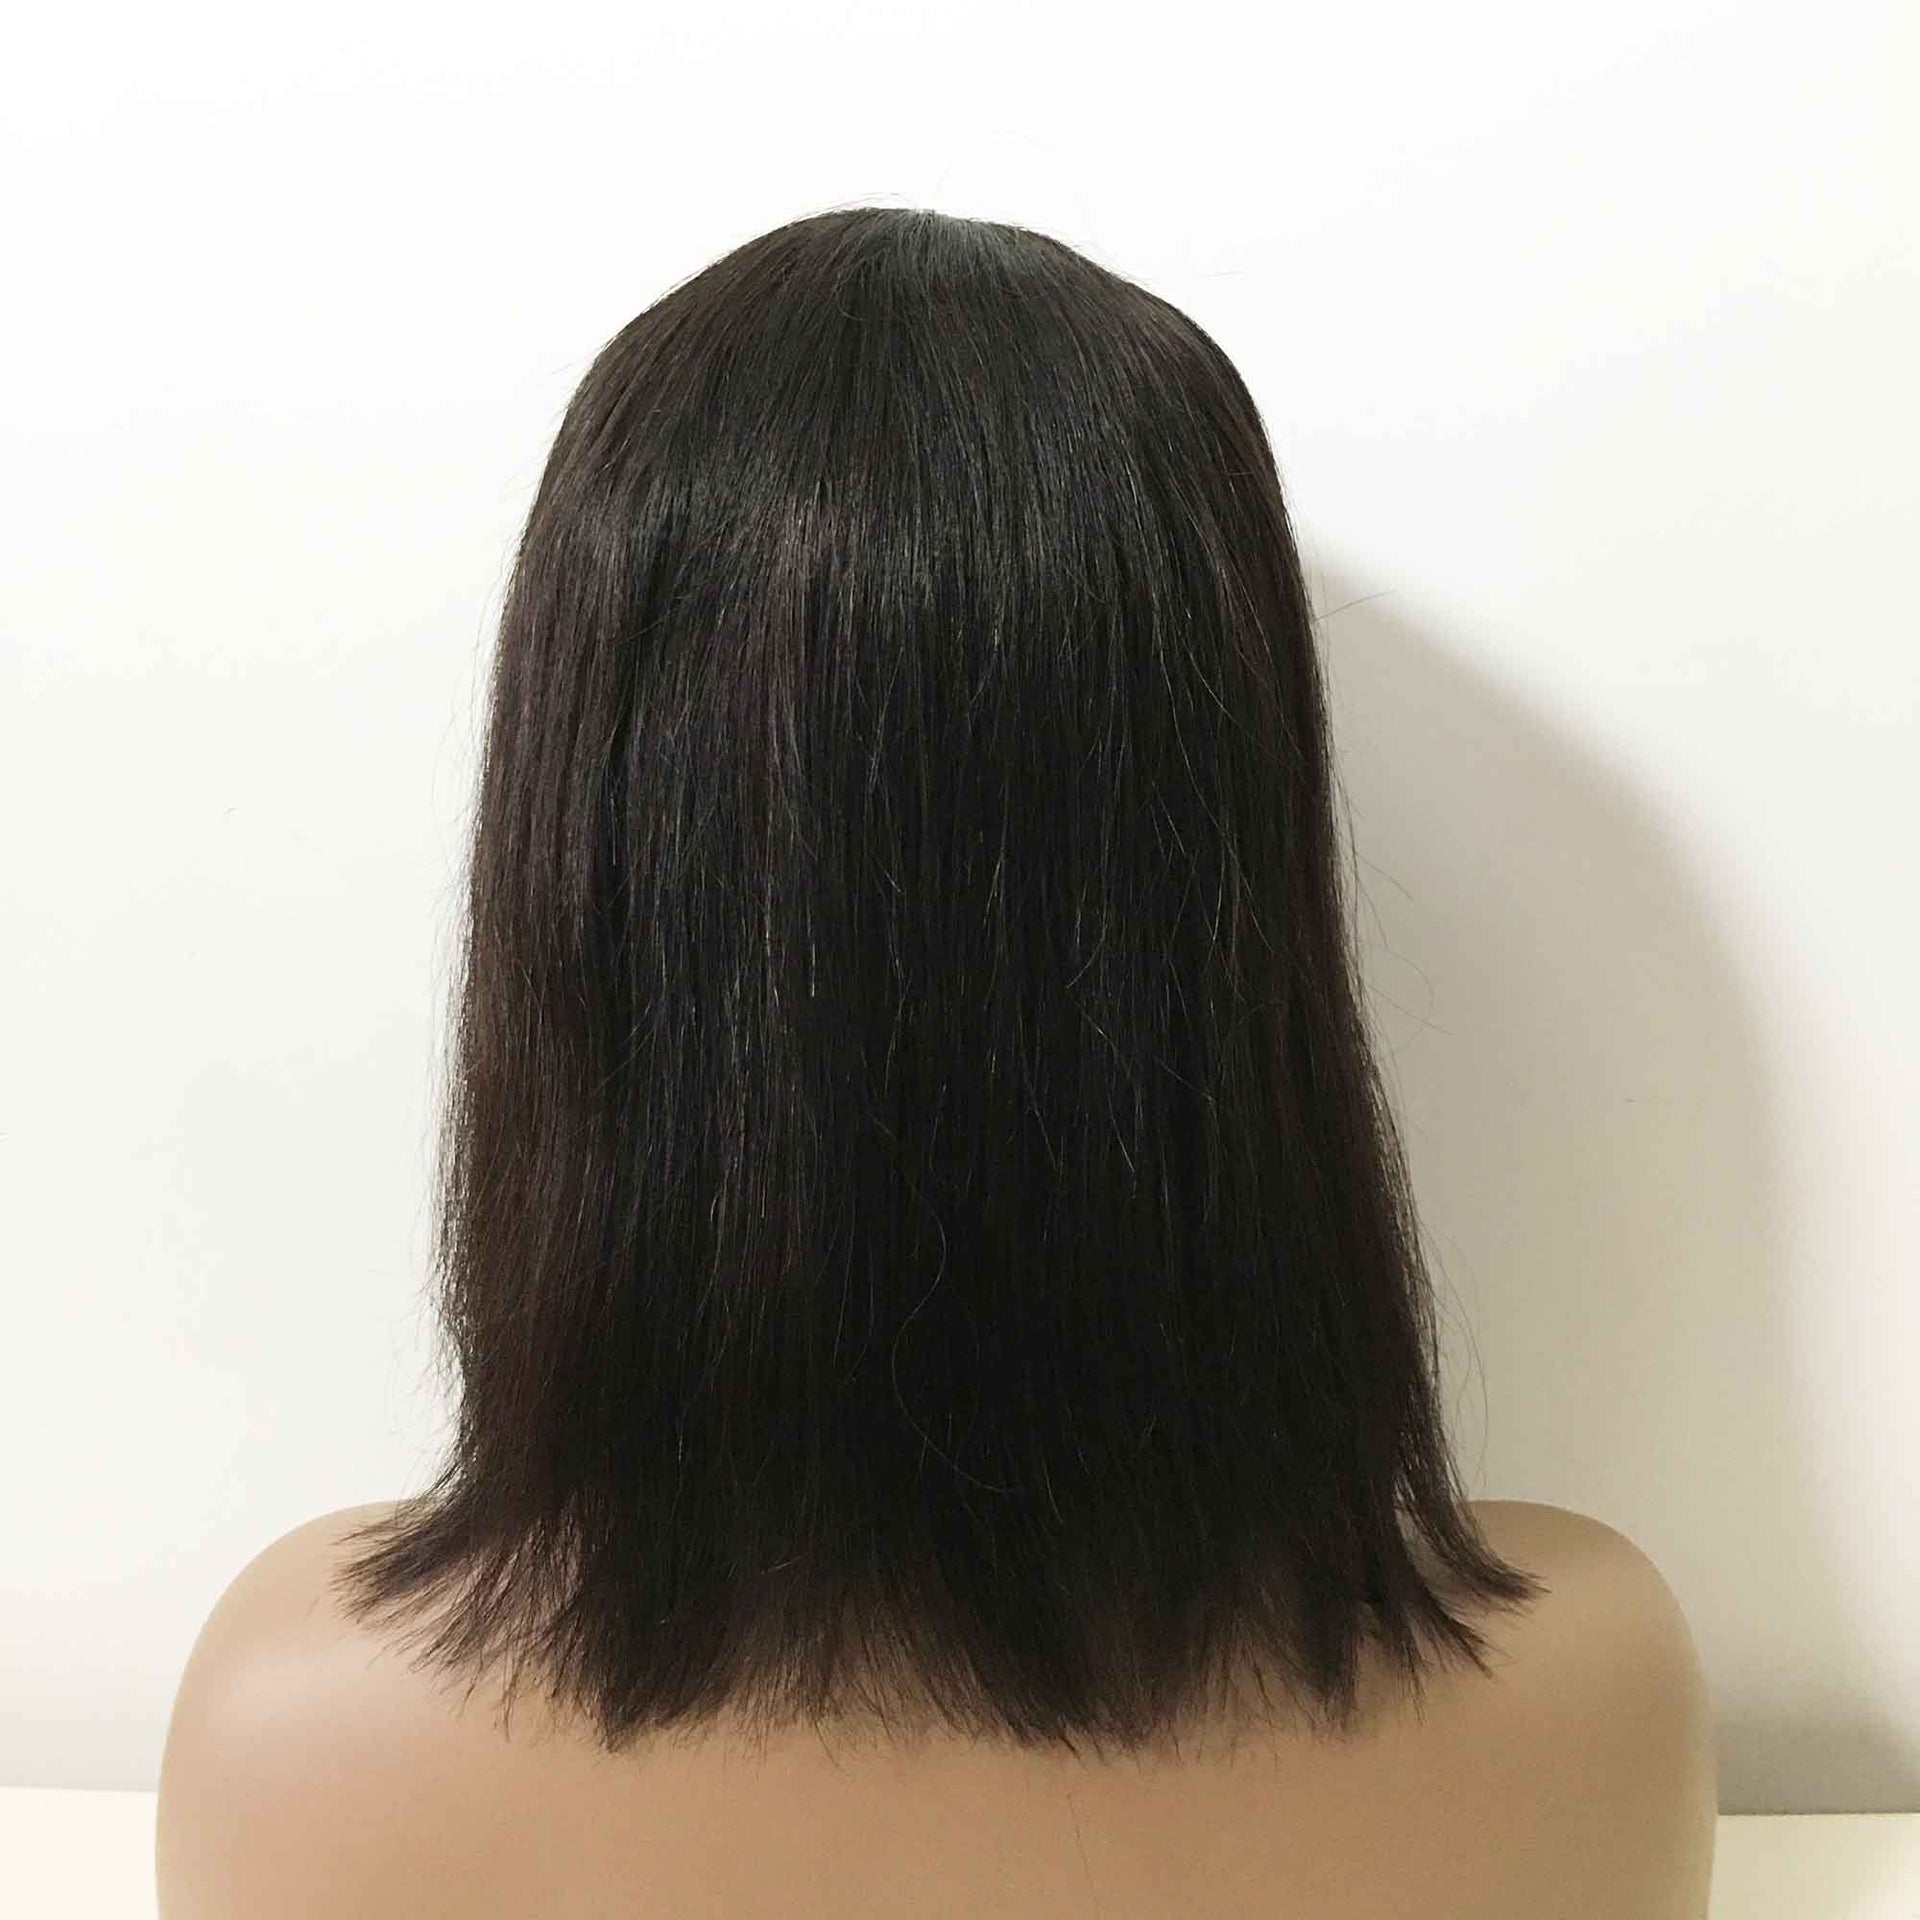 nevermindyrhead Women Black Real Human Hair Medium Length Straight Bob Fringe Bangs Wig